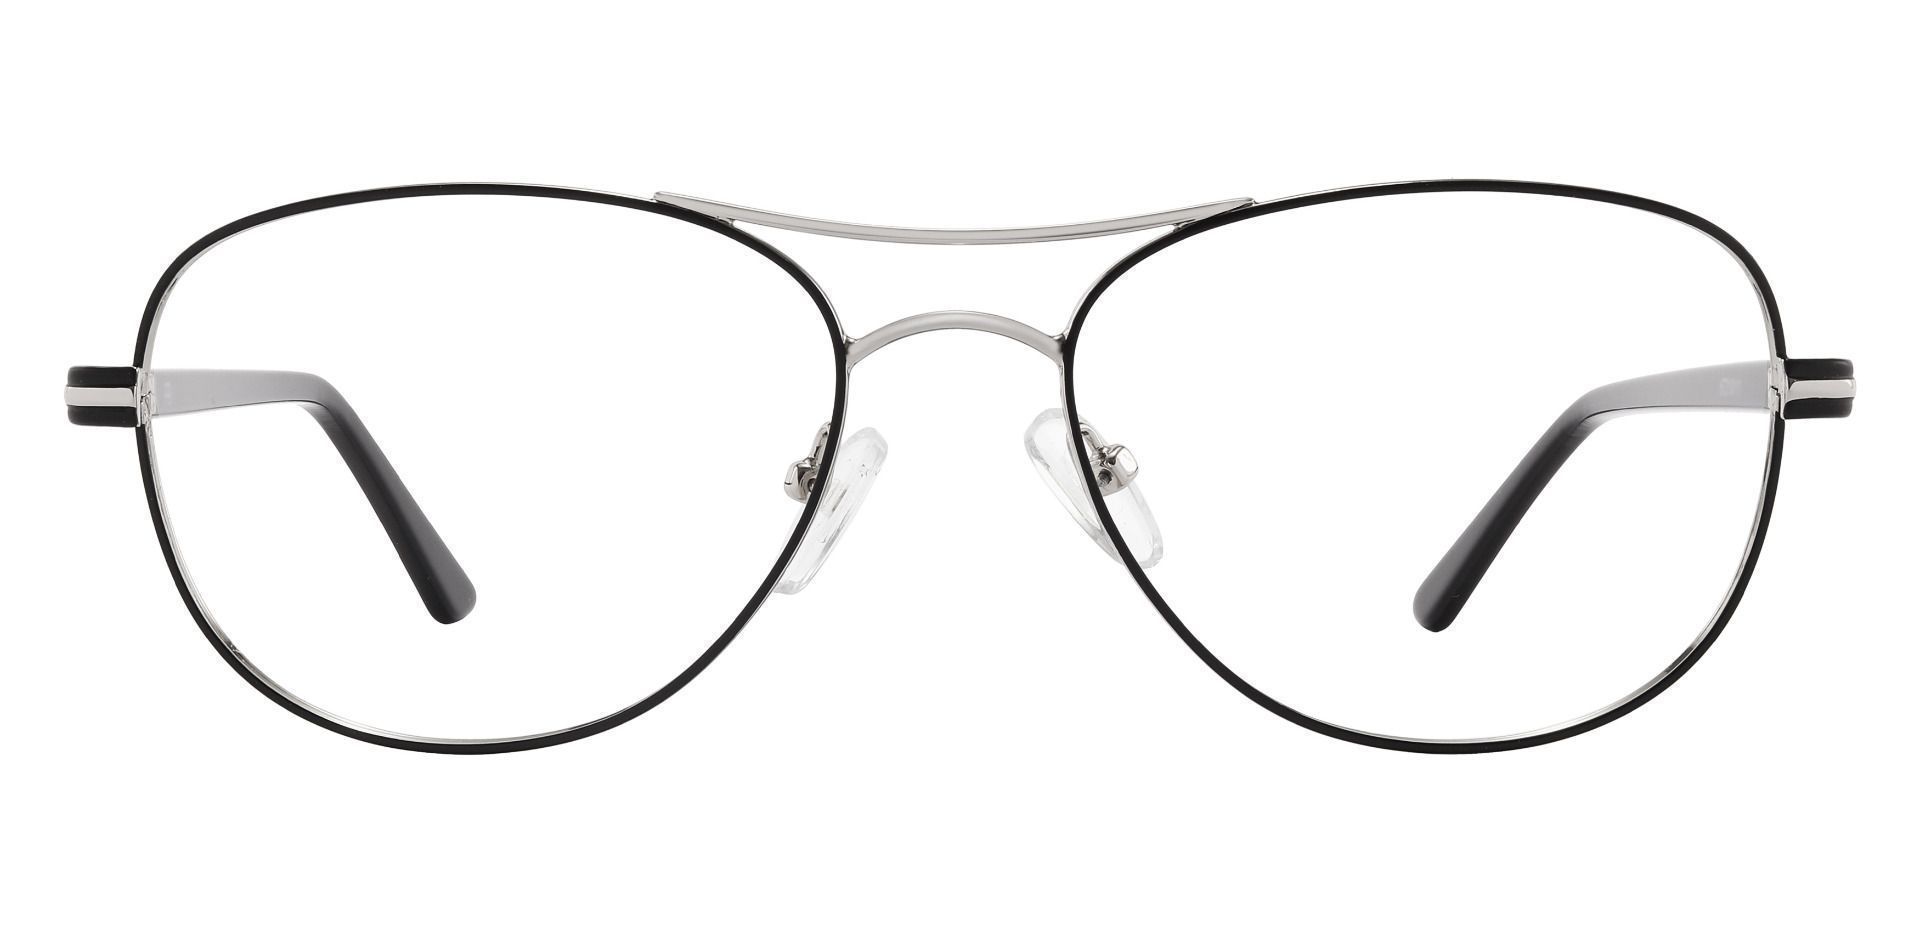 Reeves Aviator Progressive Glasses - Silver